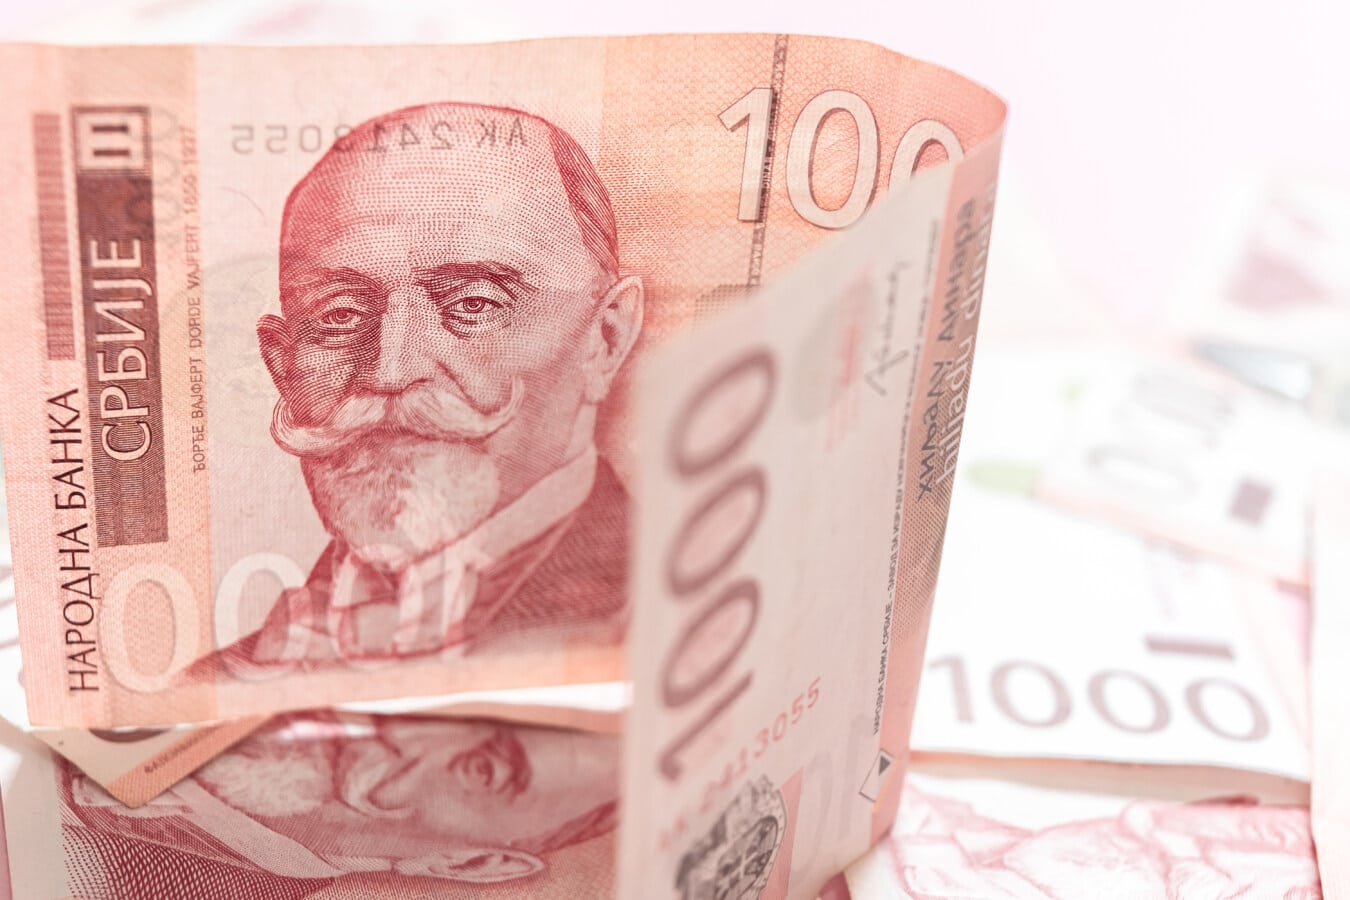 kontanter, Serbia, serbiske dinarer, seddel, penger, papir, verdi, inntekt, besparelser, økonomi